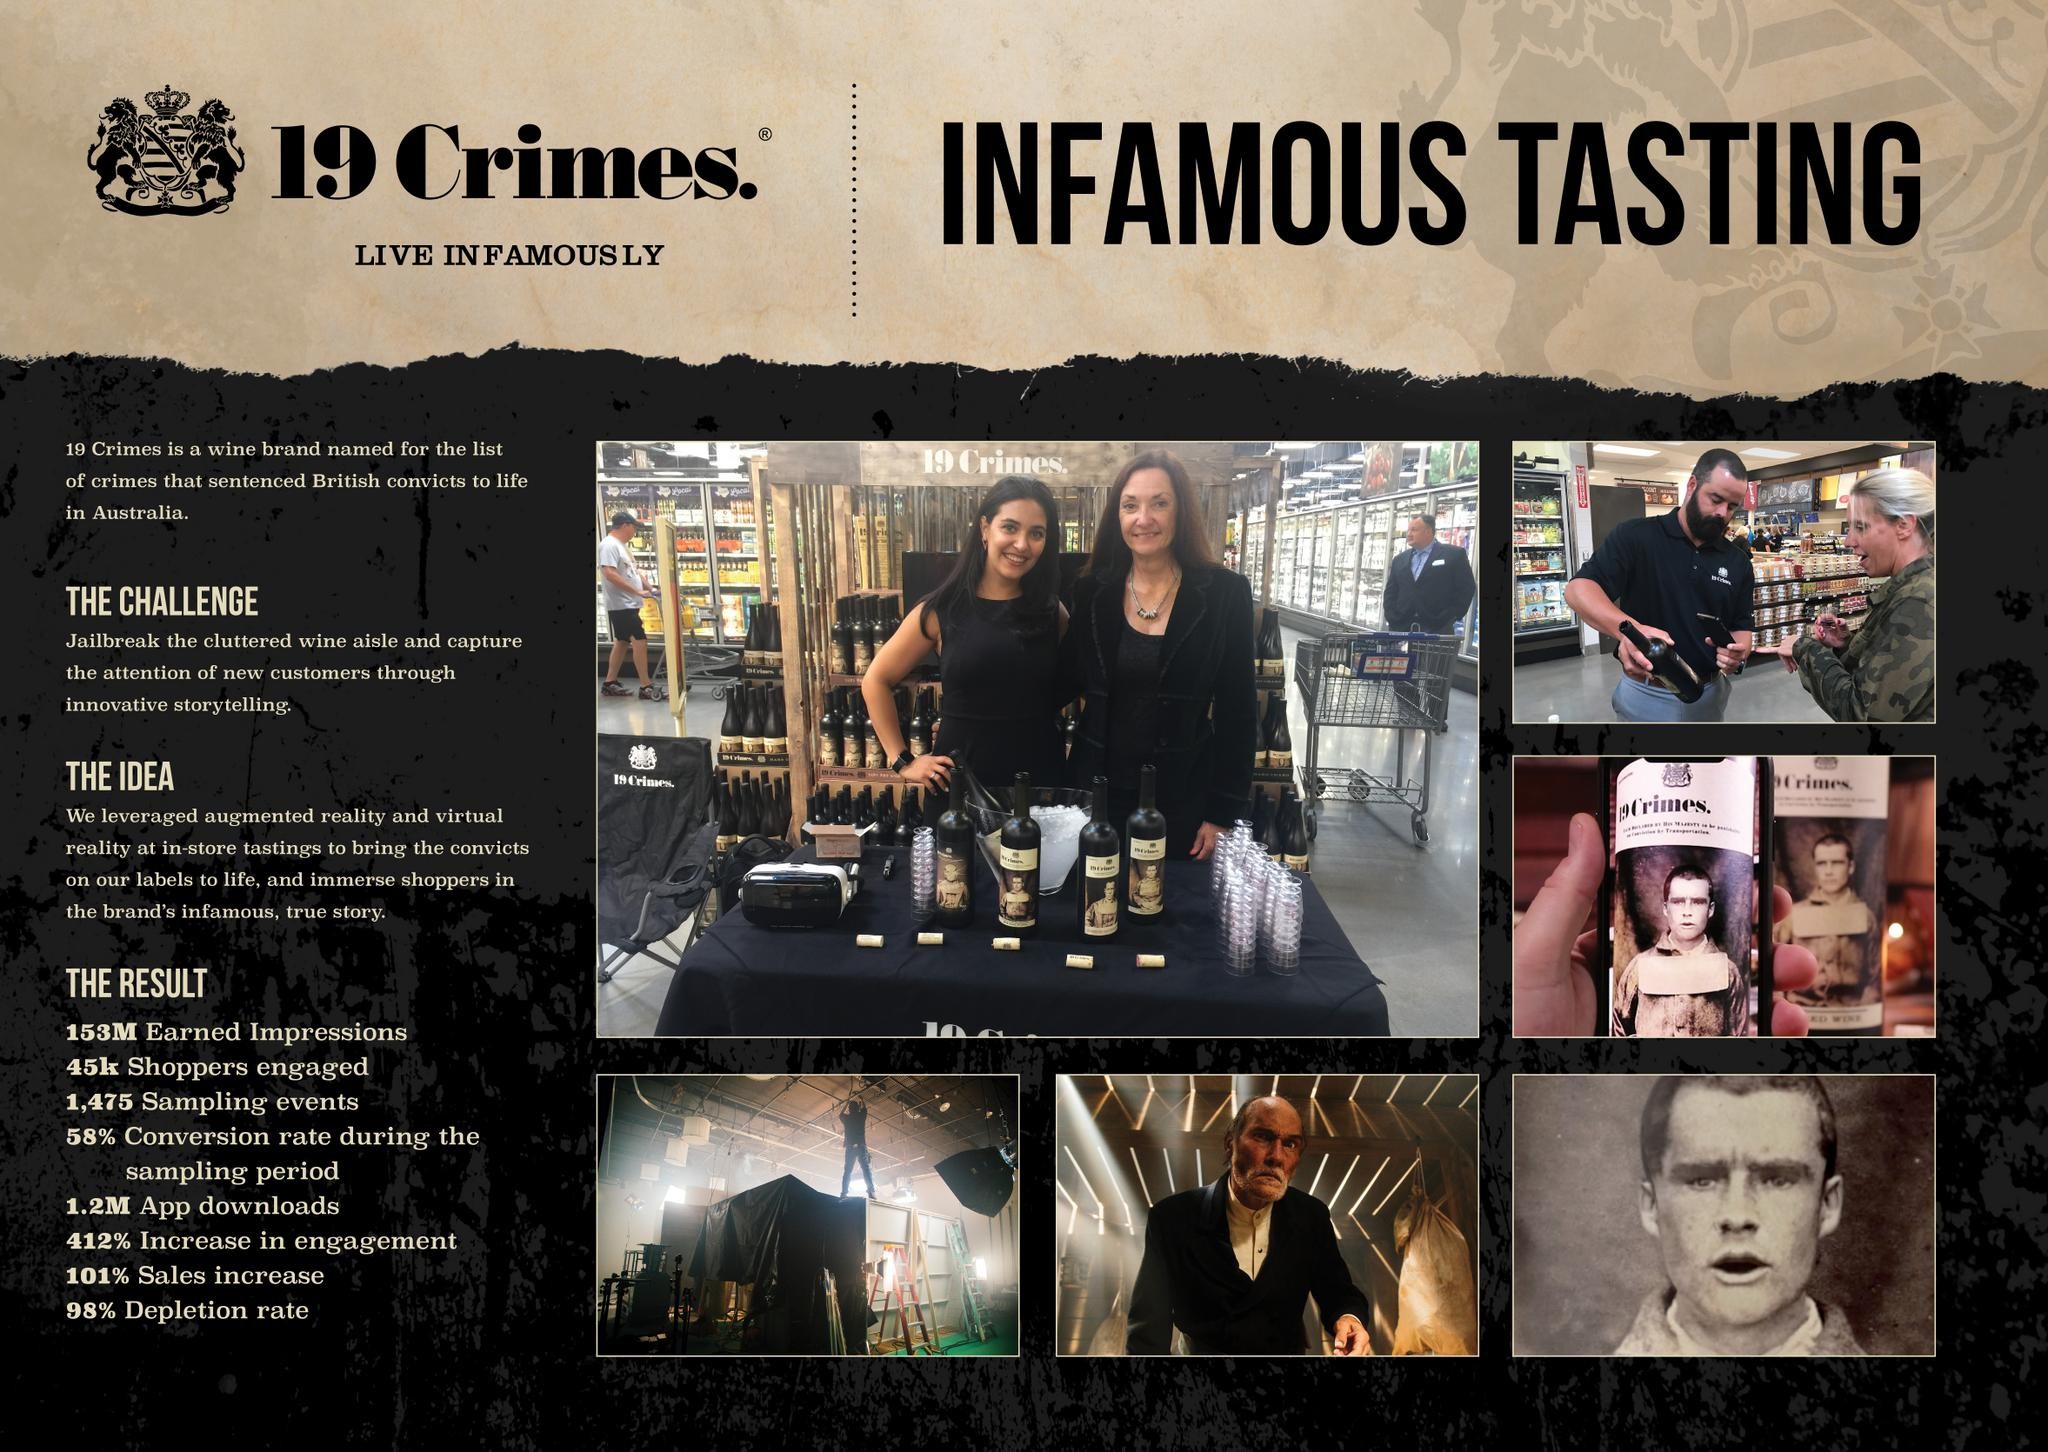 19 Crimes Infamous Tasting